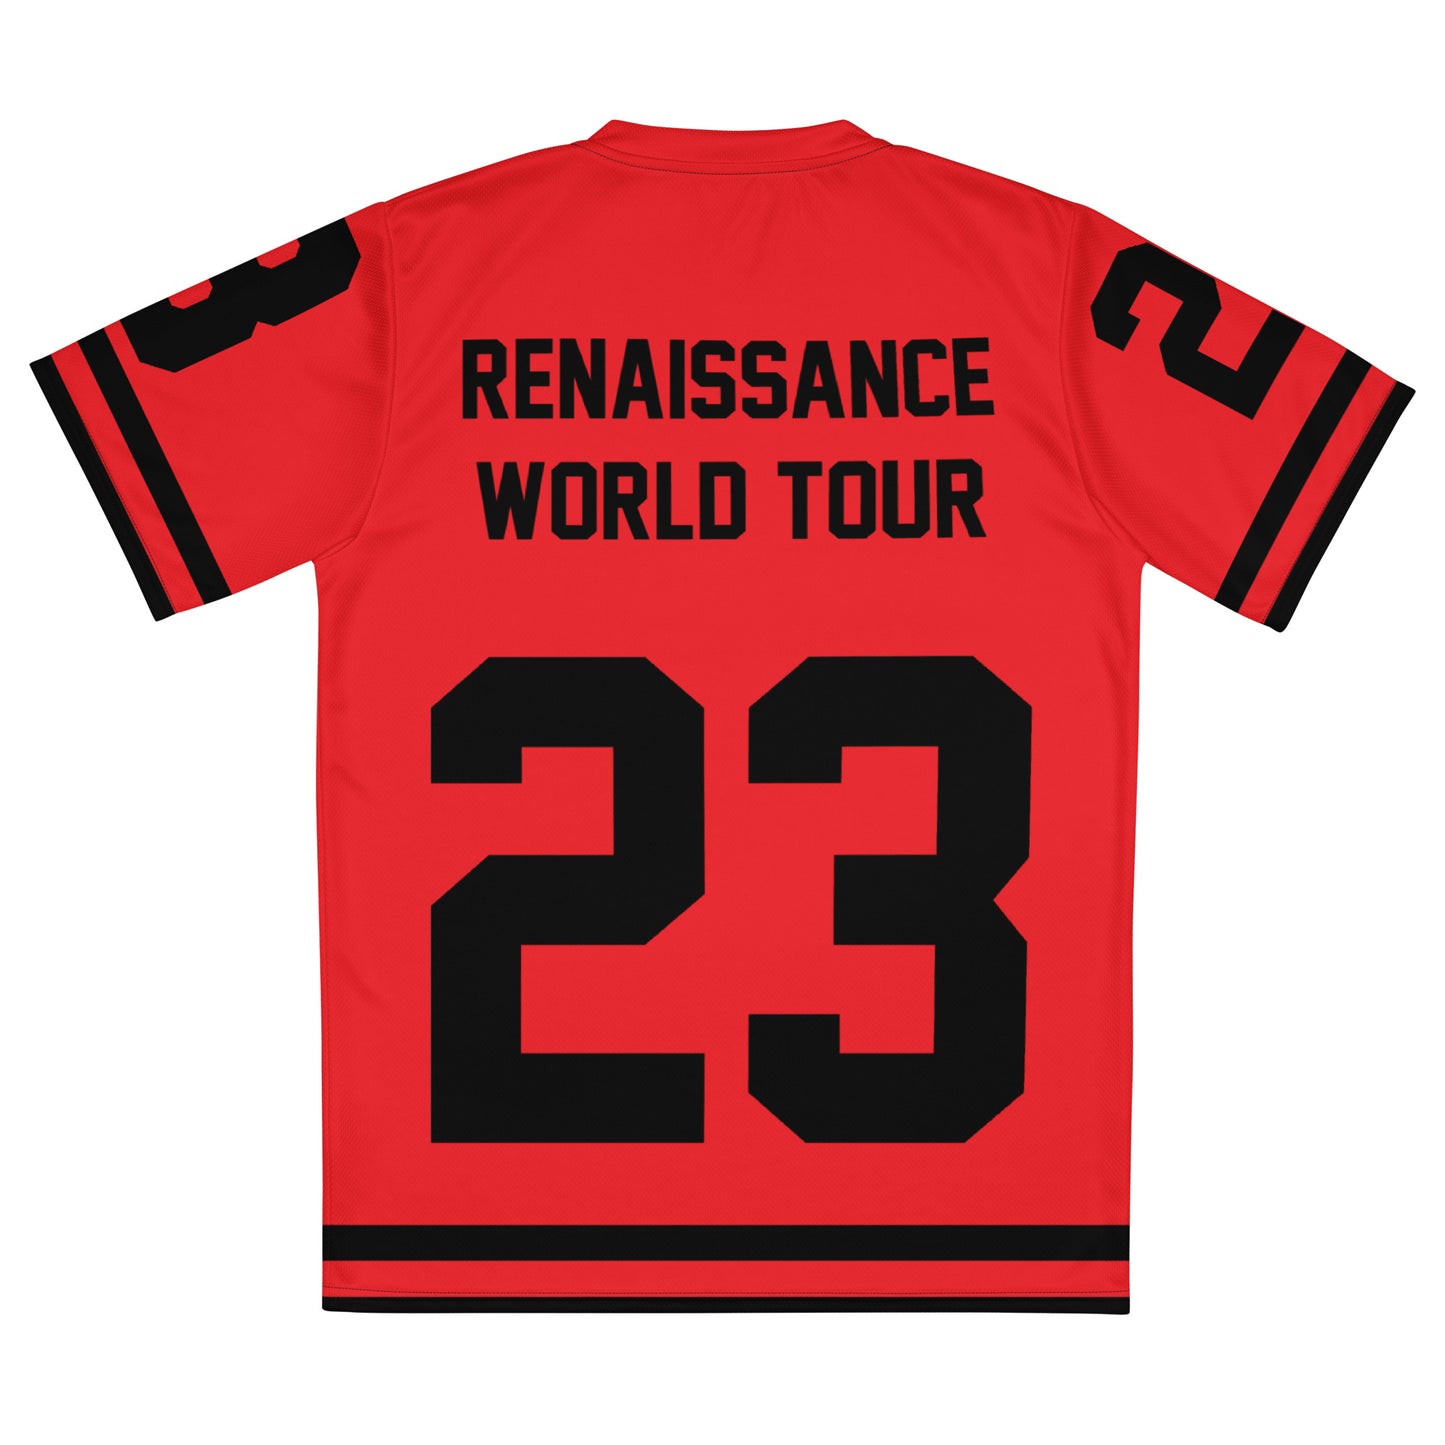 Renaissance World Tour Jersey | Renaissance Tour Jersey